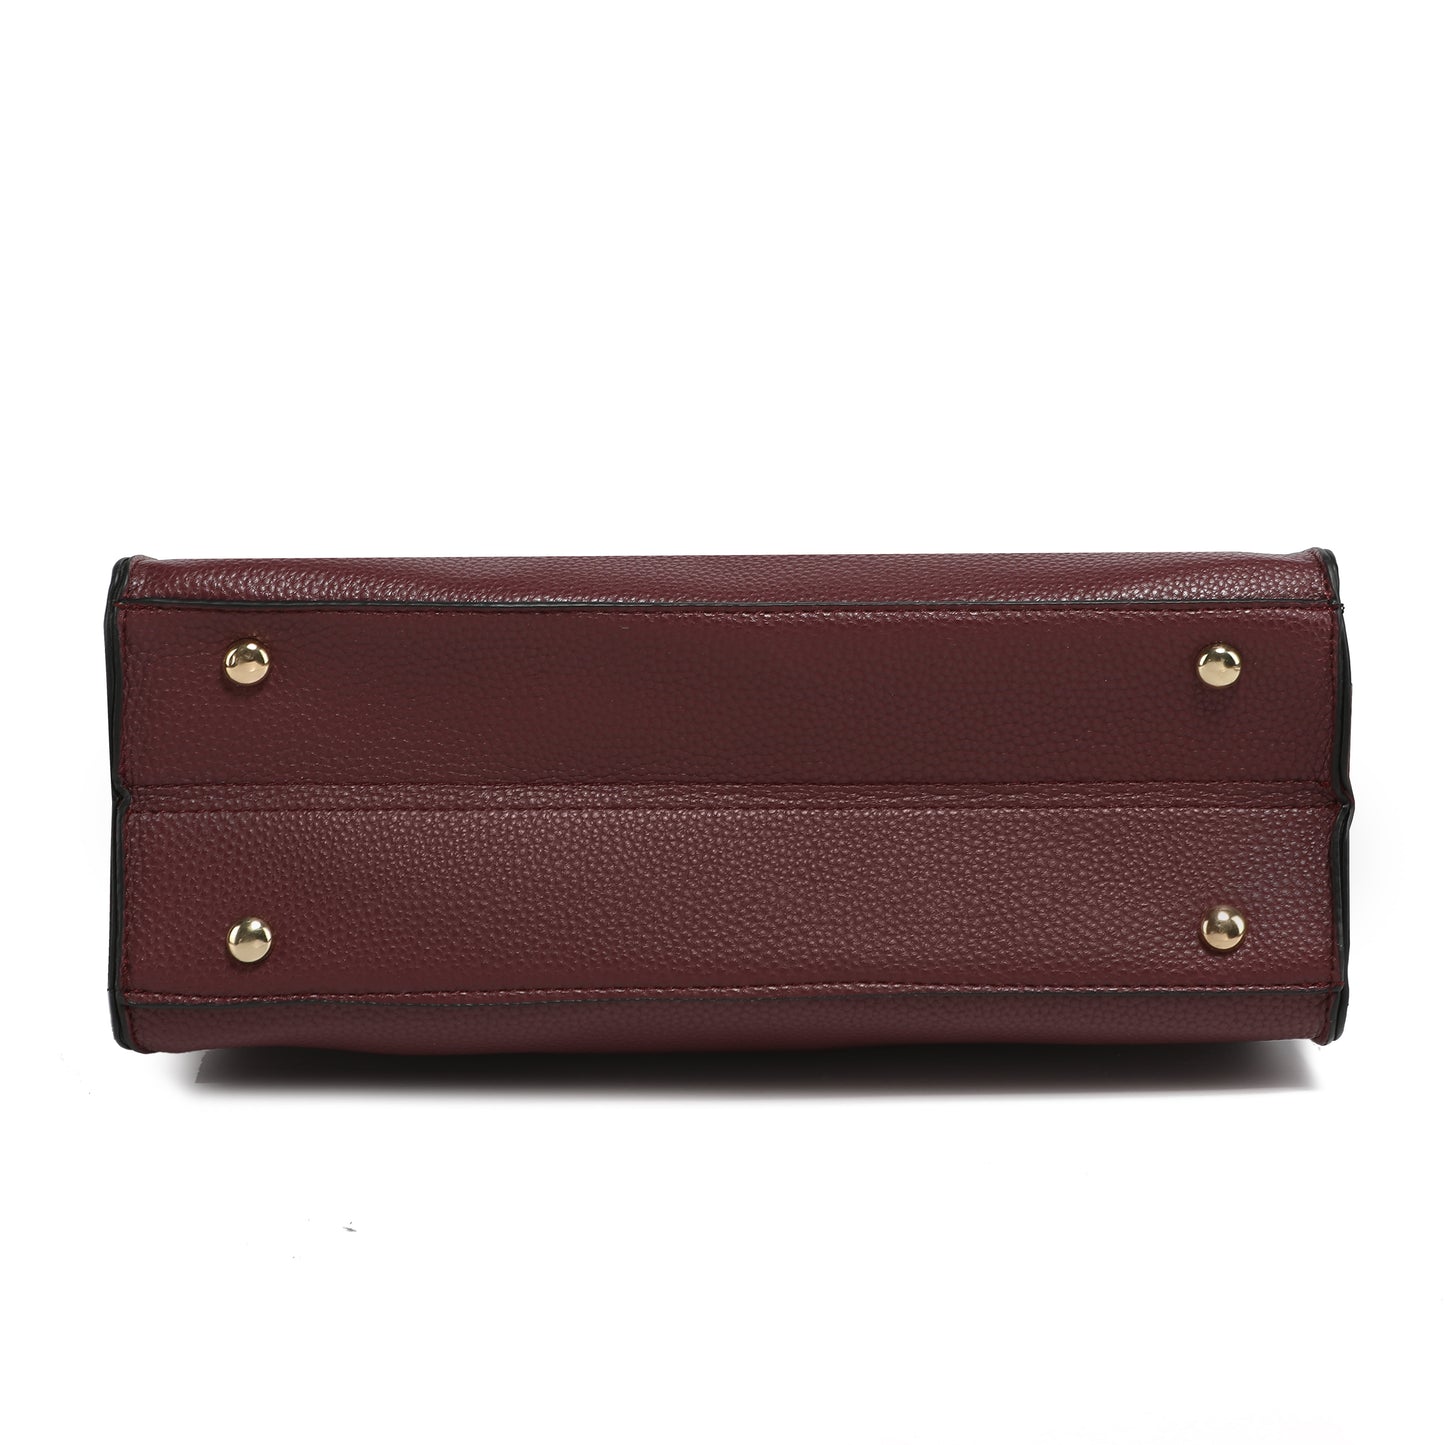 Brynlee Women'S Tote Bag & Wristlet Wallet, Crossbody Purse Handbag 2 Pcs by Mia K - Navy